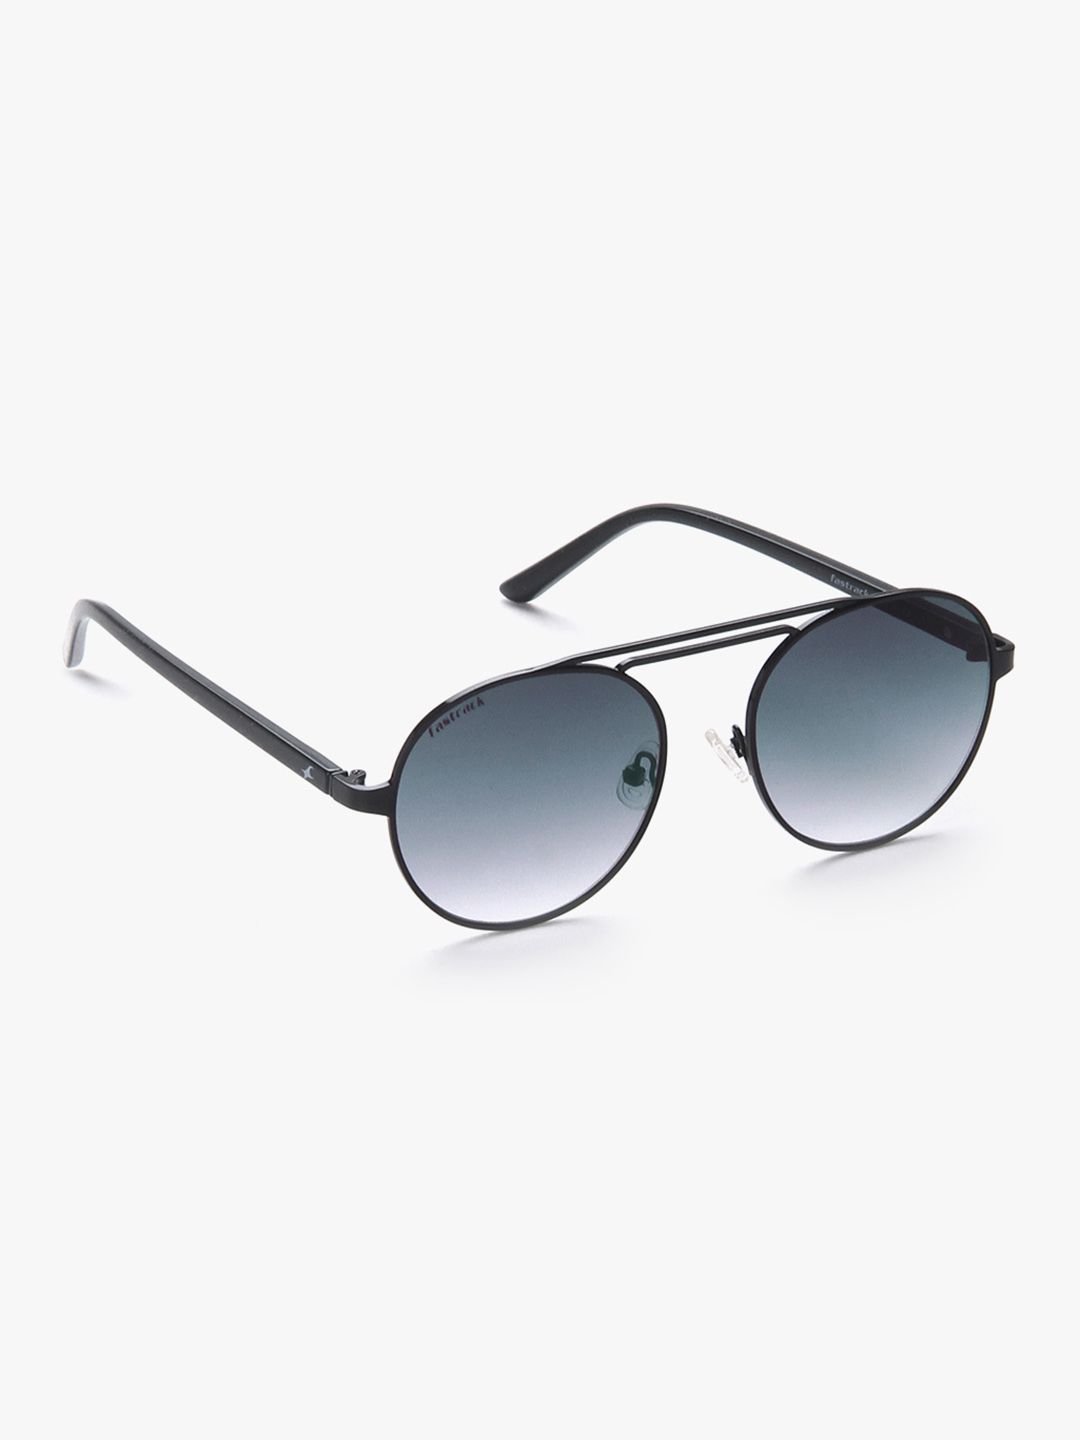 Fastrack Women Round Sunglasses M204BK4 Price in India